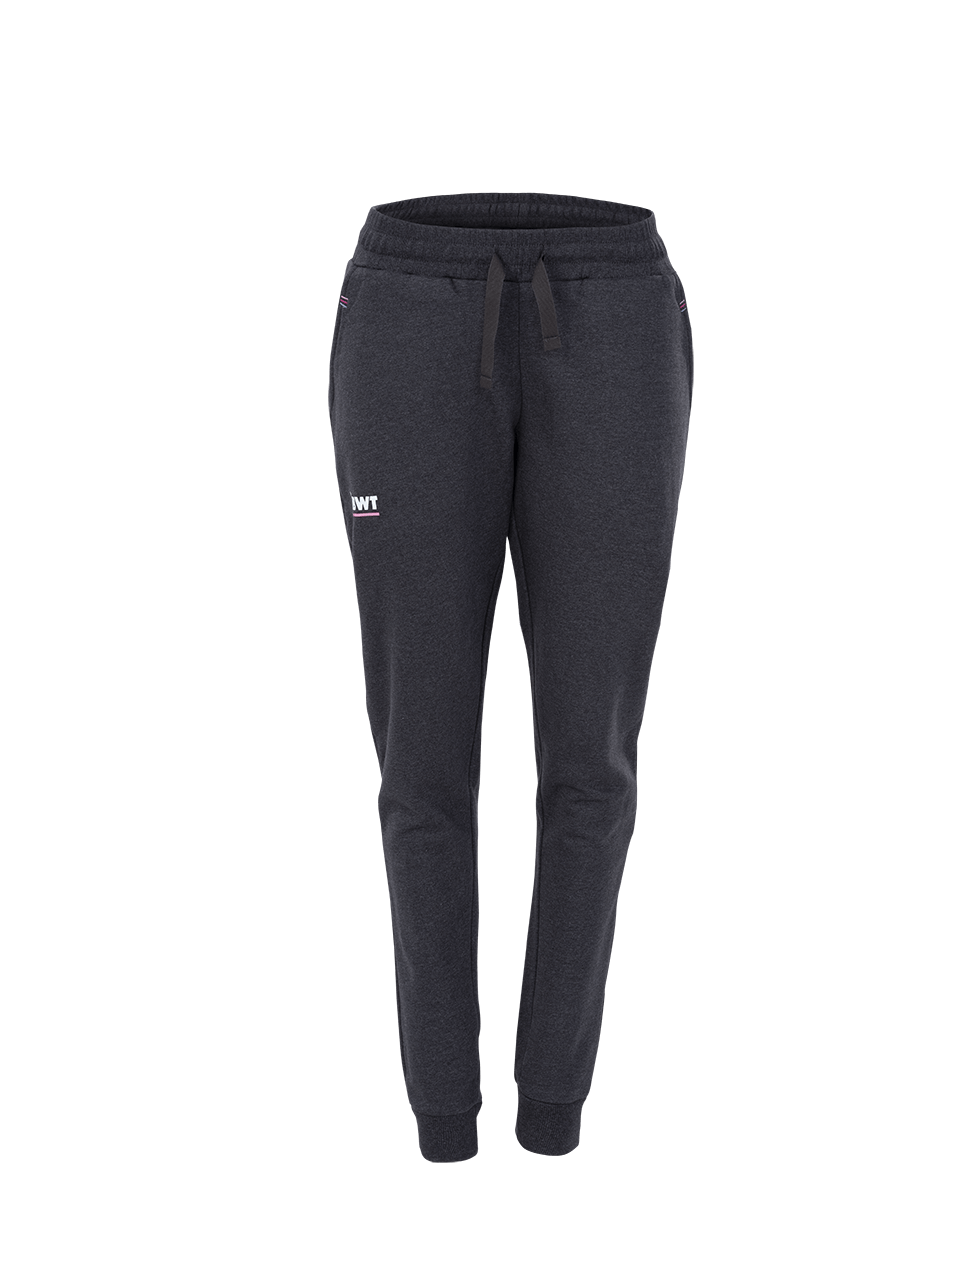 Ladies grey jogging trousers